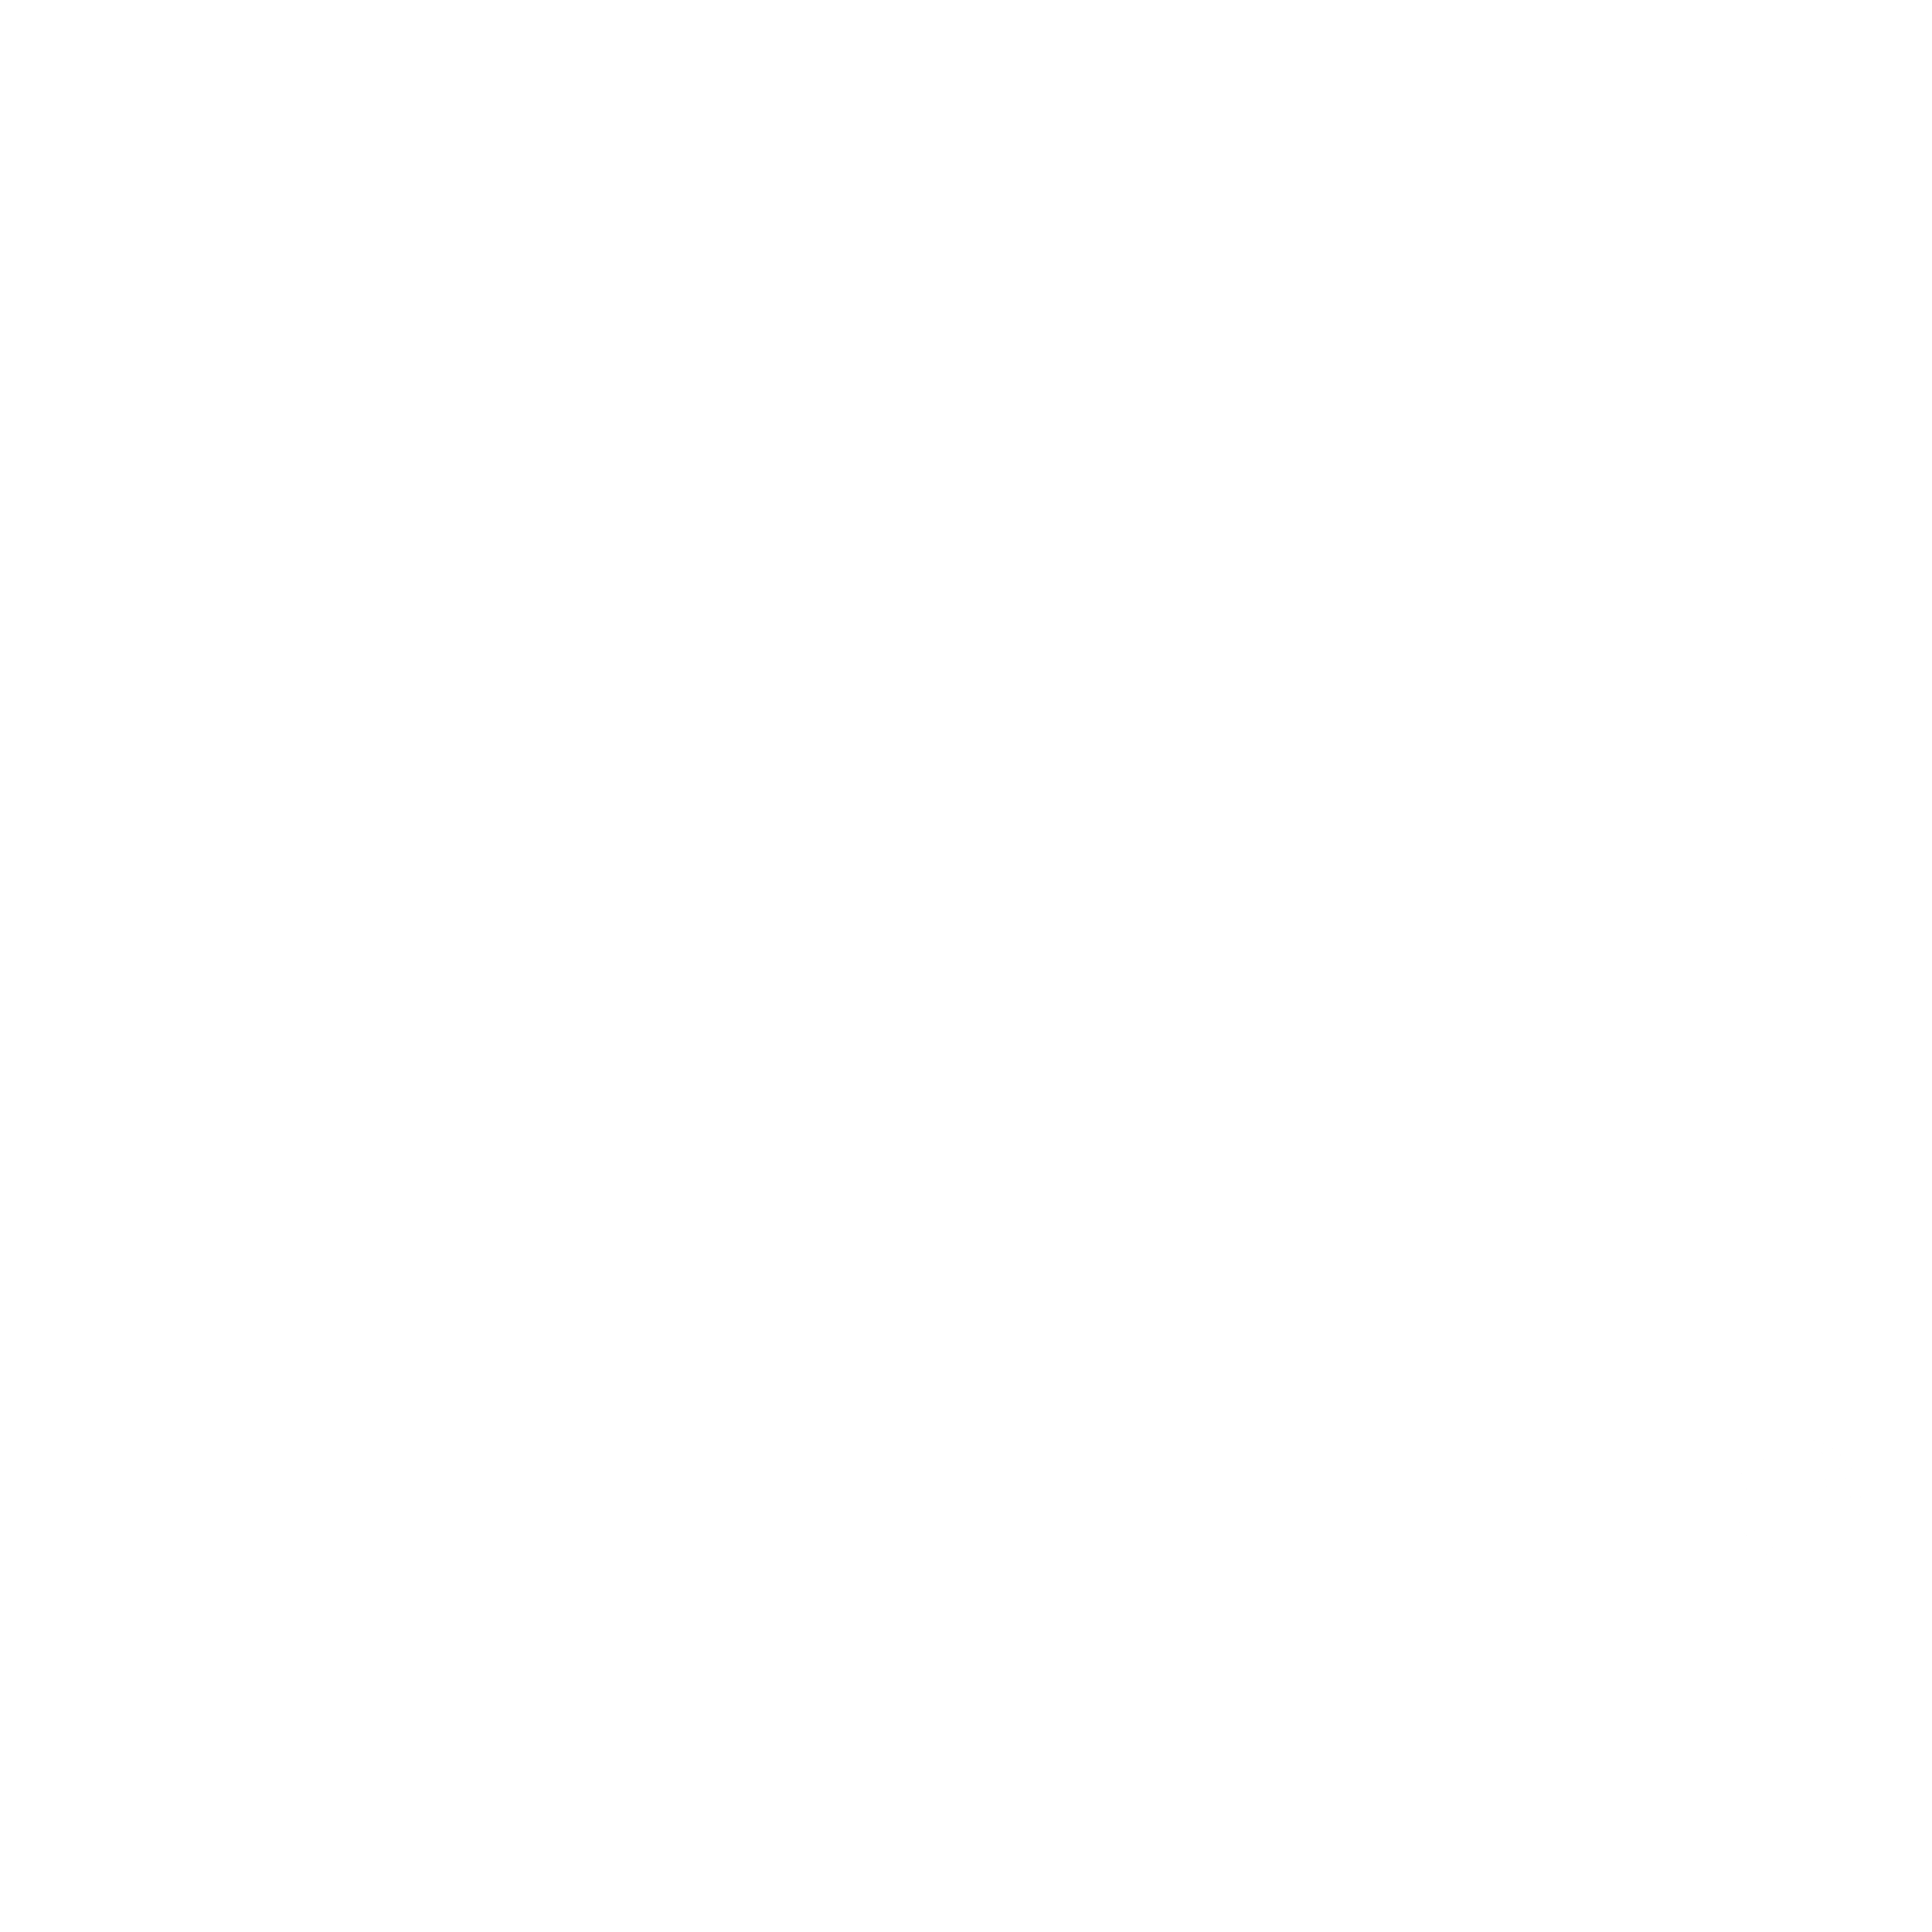 Circle K Logo - Circle K Logo PNG Transparent & SVG Vector - Freebie Supply